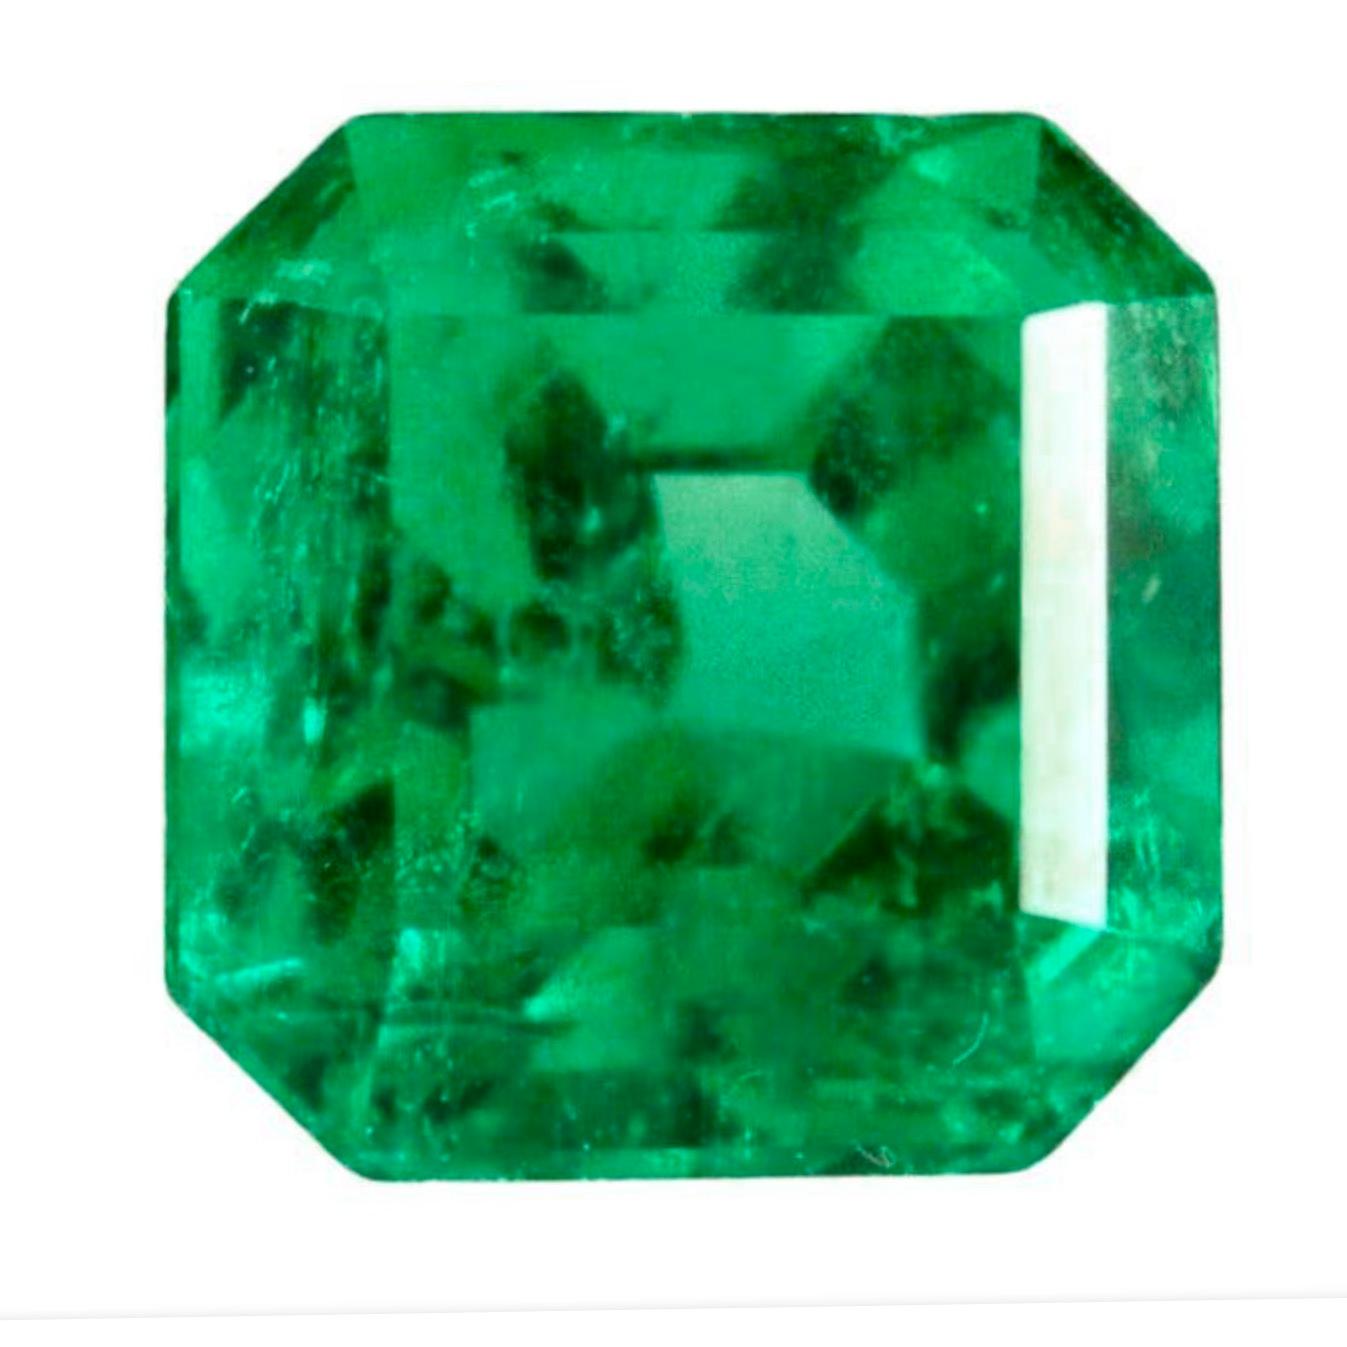 1.09 Carat Colombian Emerald Assecher Cut For Sale